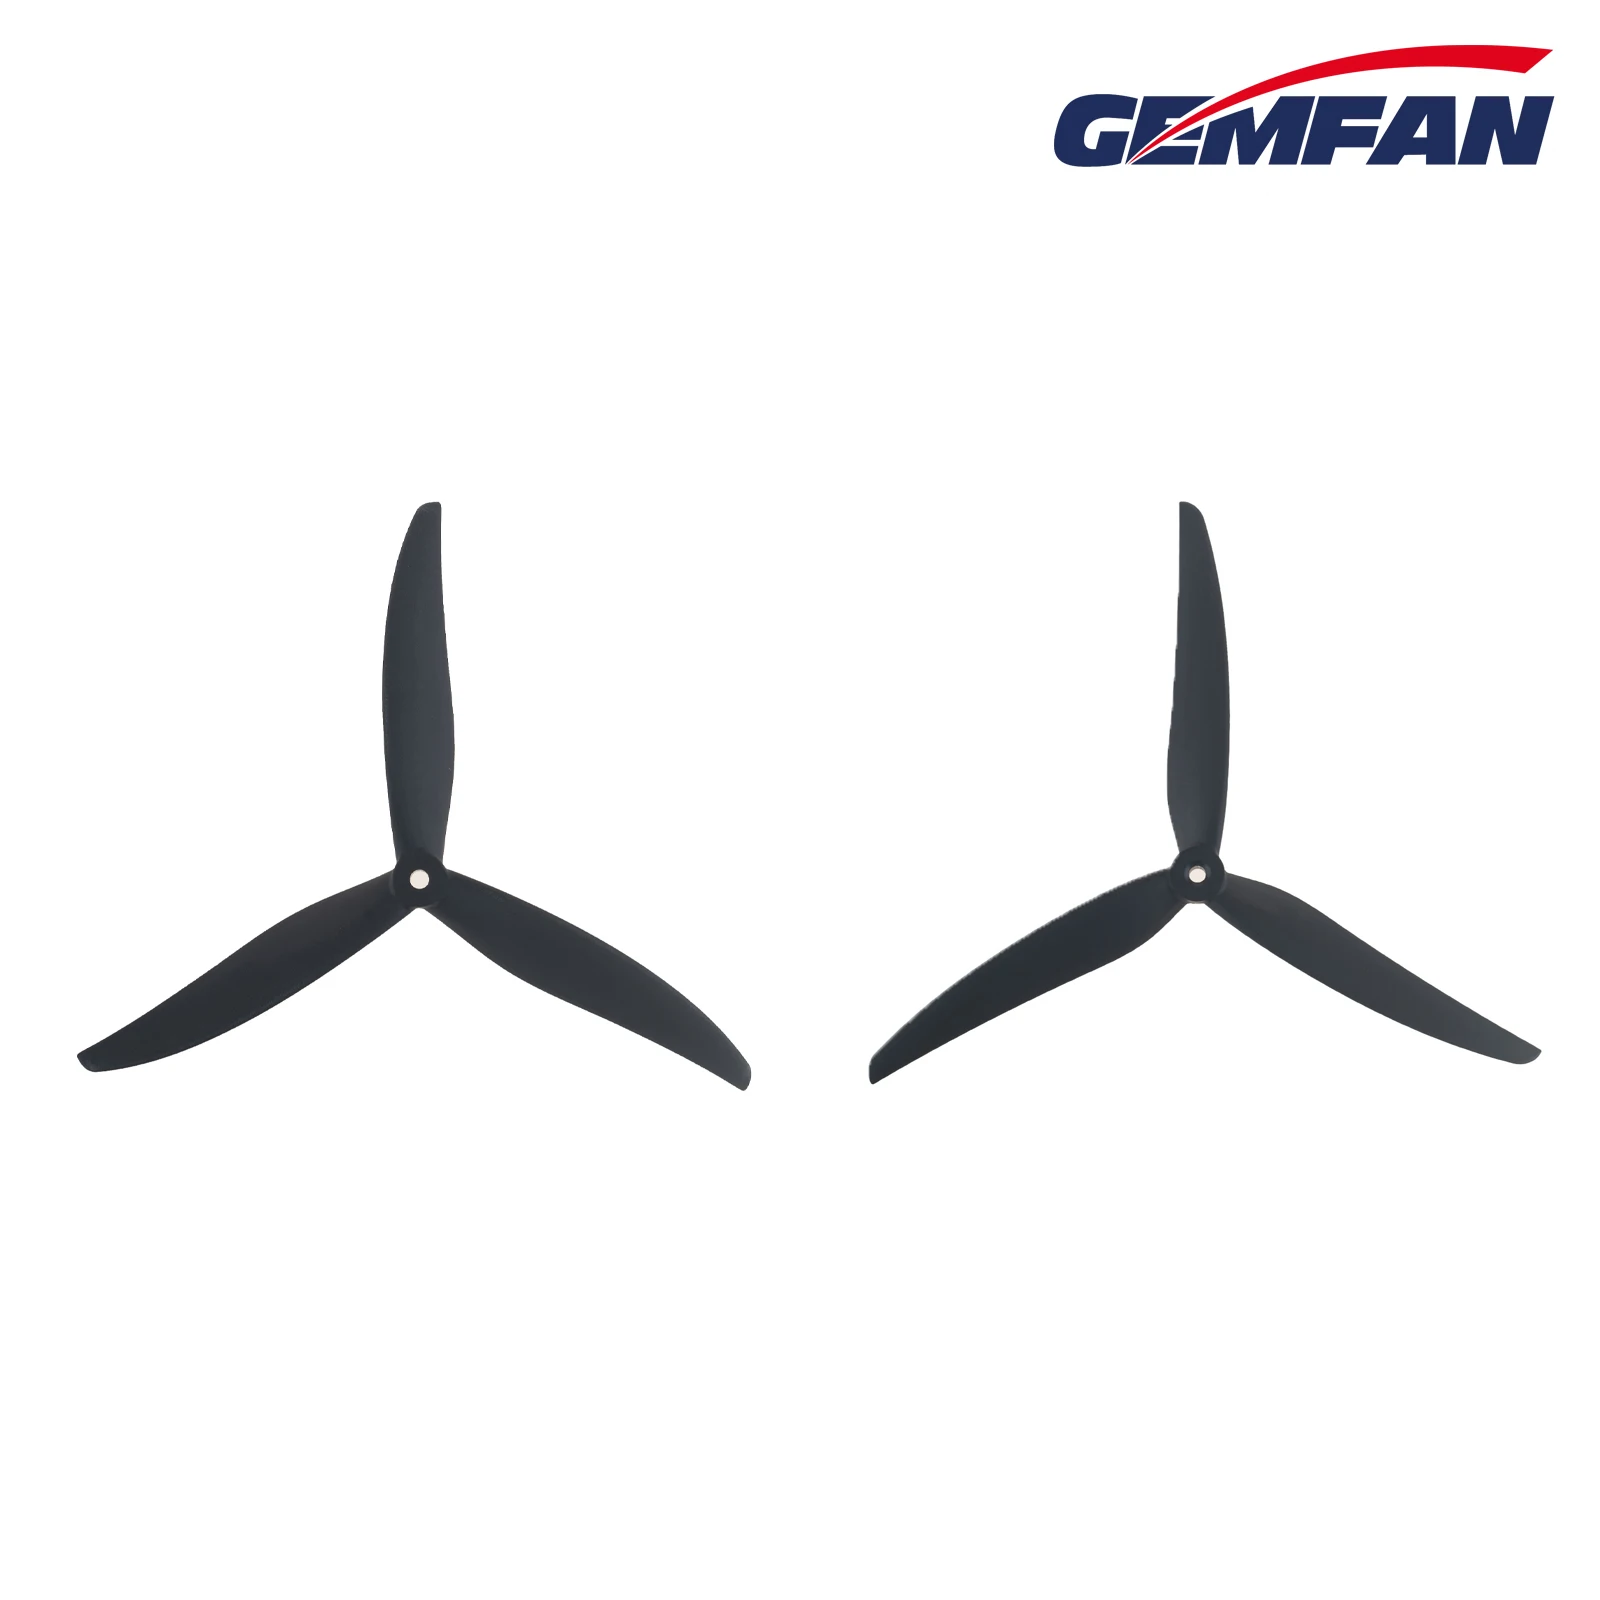 Gemfan 9x4.5x3 9045 3-blade Glass Fiber Nylon propeller